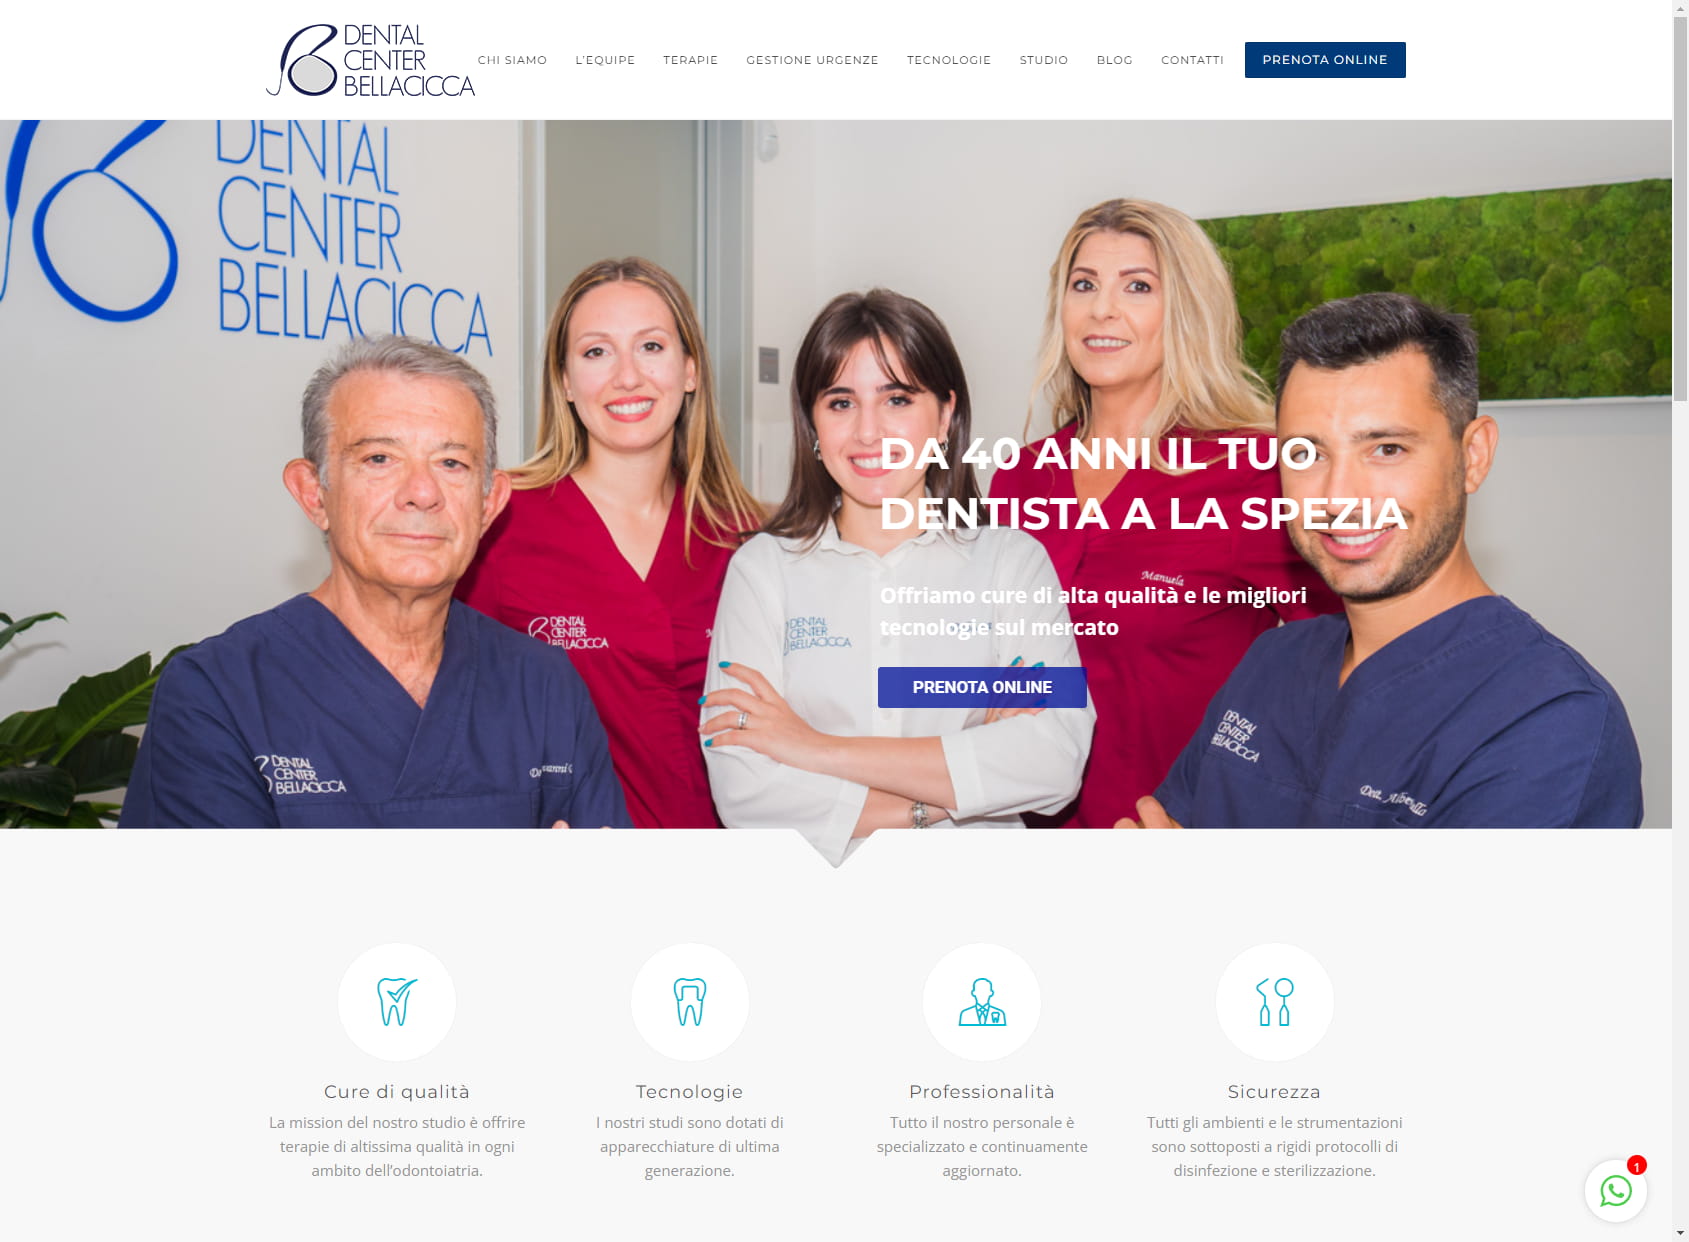 Dental Center Bellacicca | Dentista La Spezia